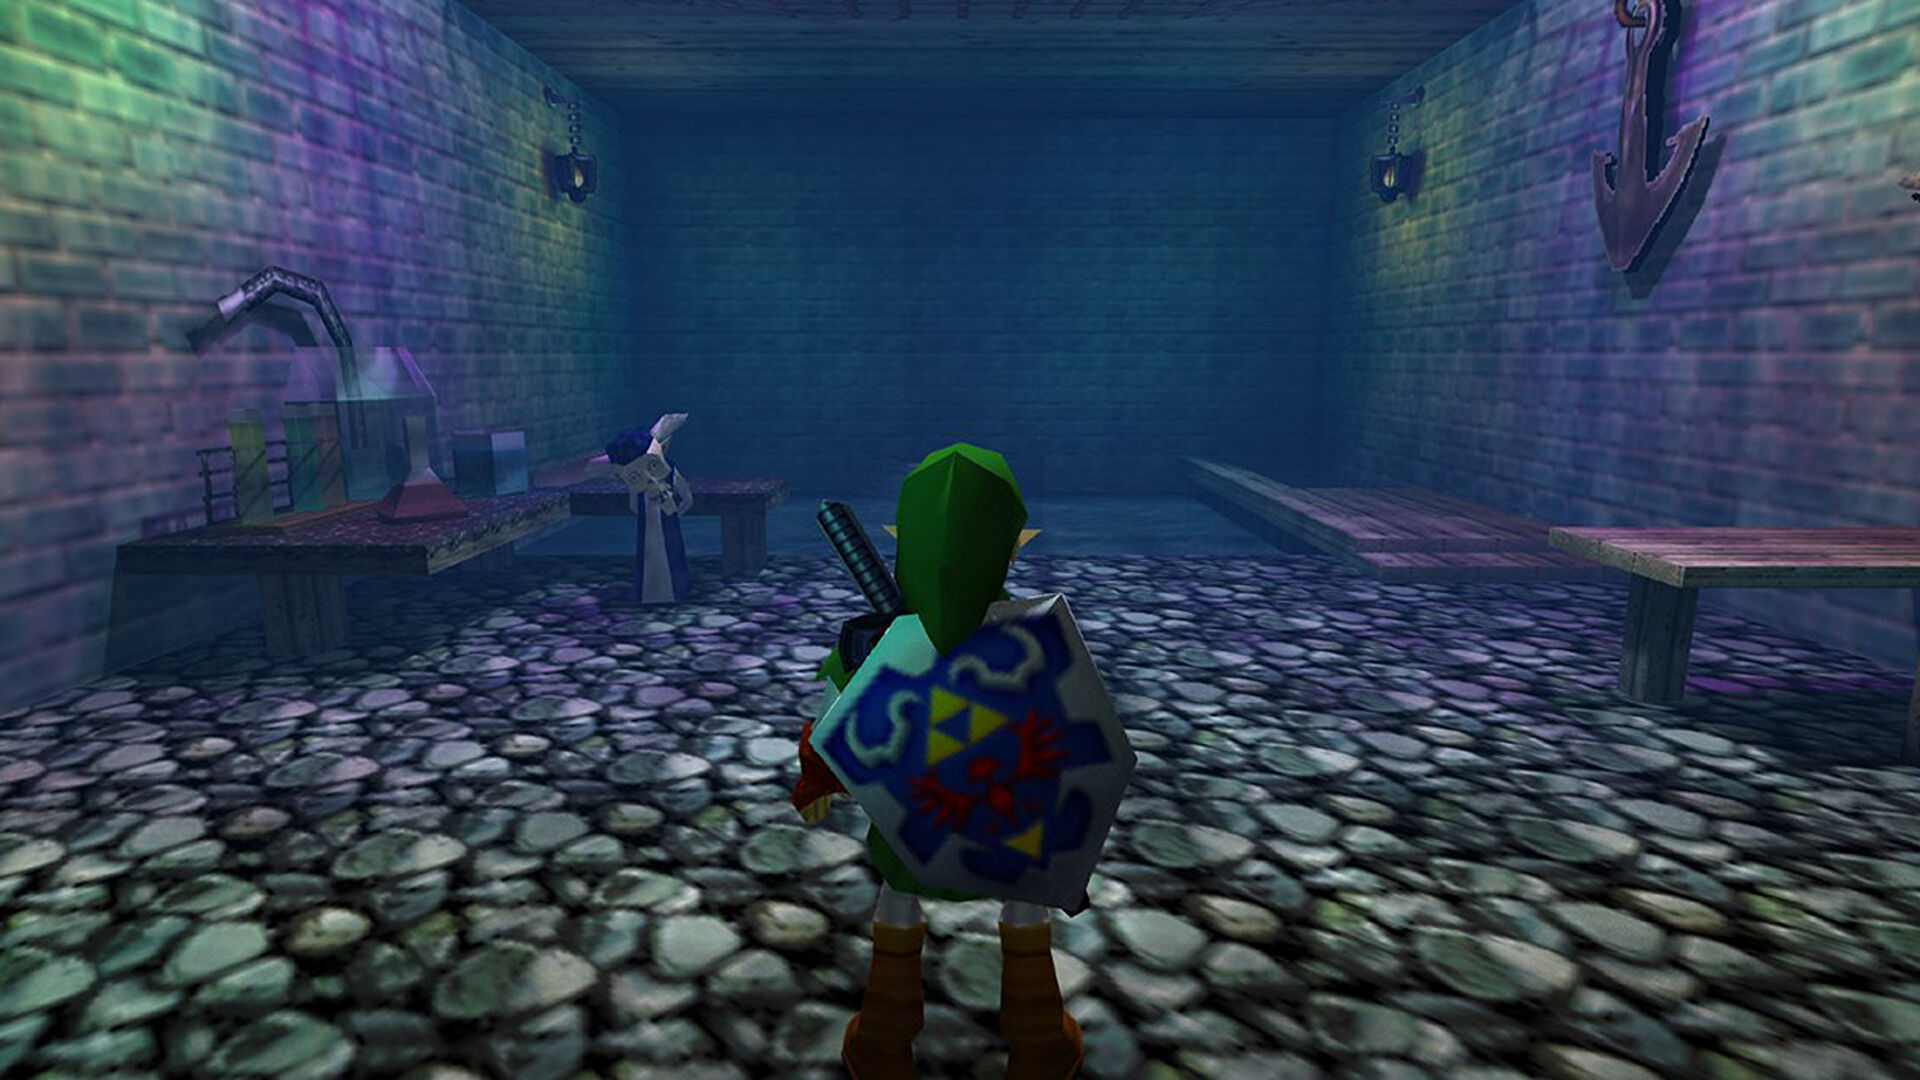 The Legend of Zelda Ocarina of Time Nintendo 64 Game – The Game Island